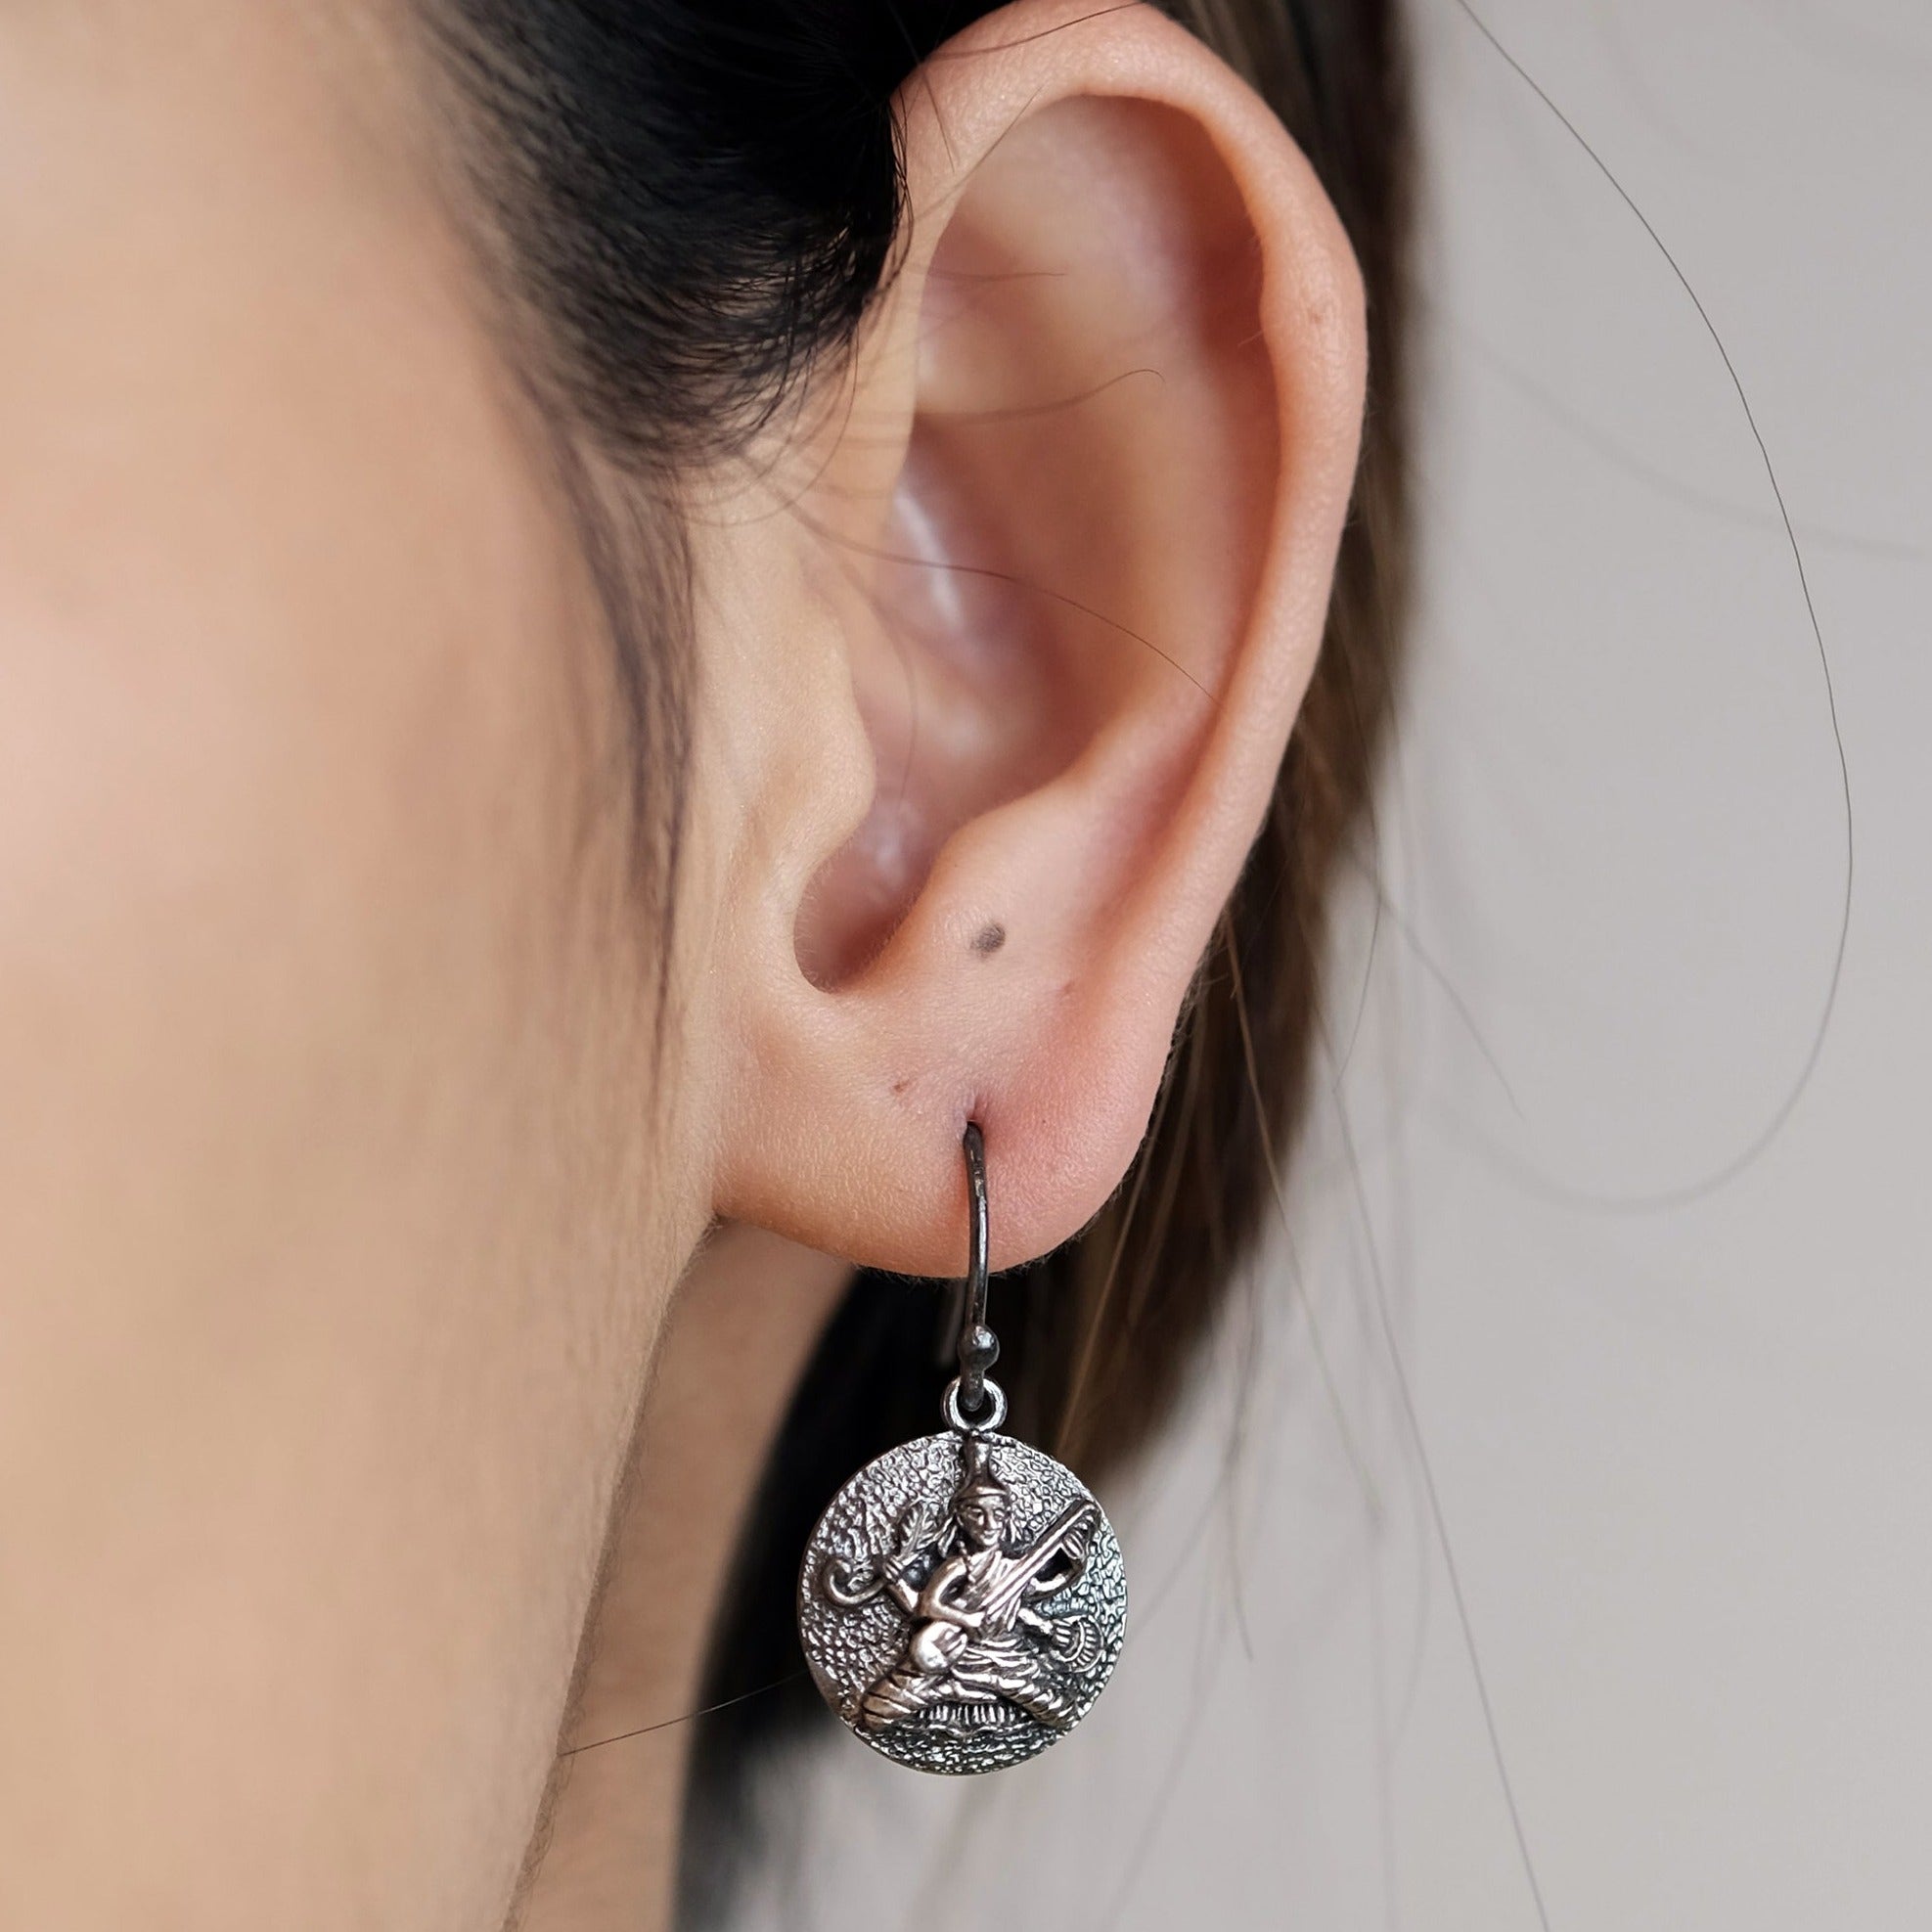 The Madstone Saraswati earrings